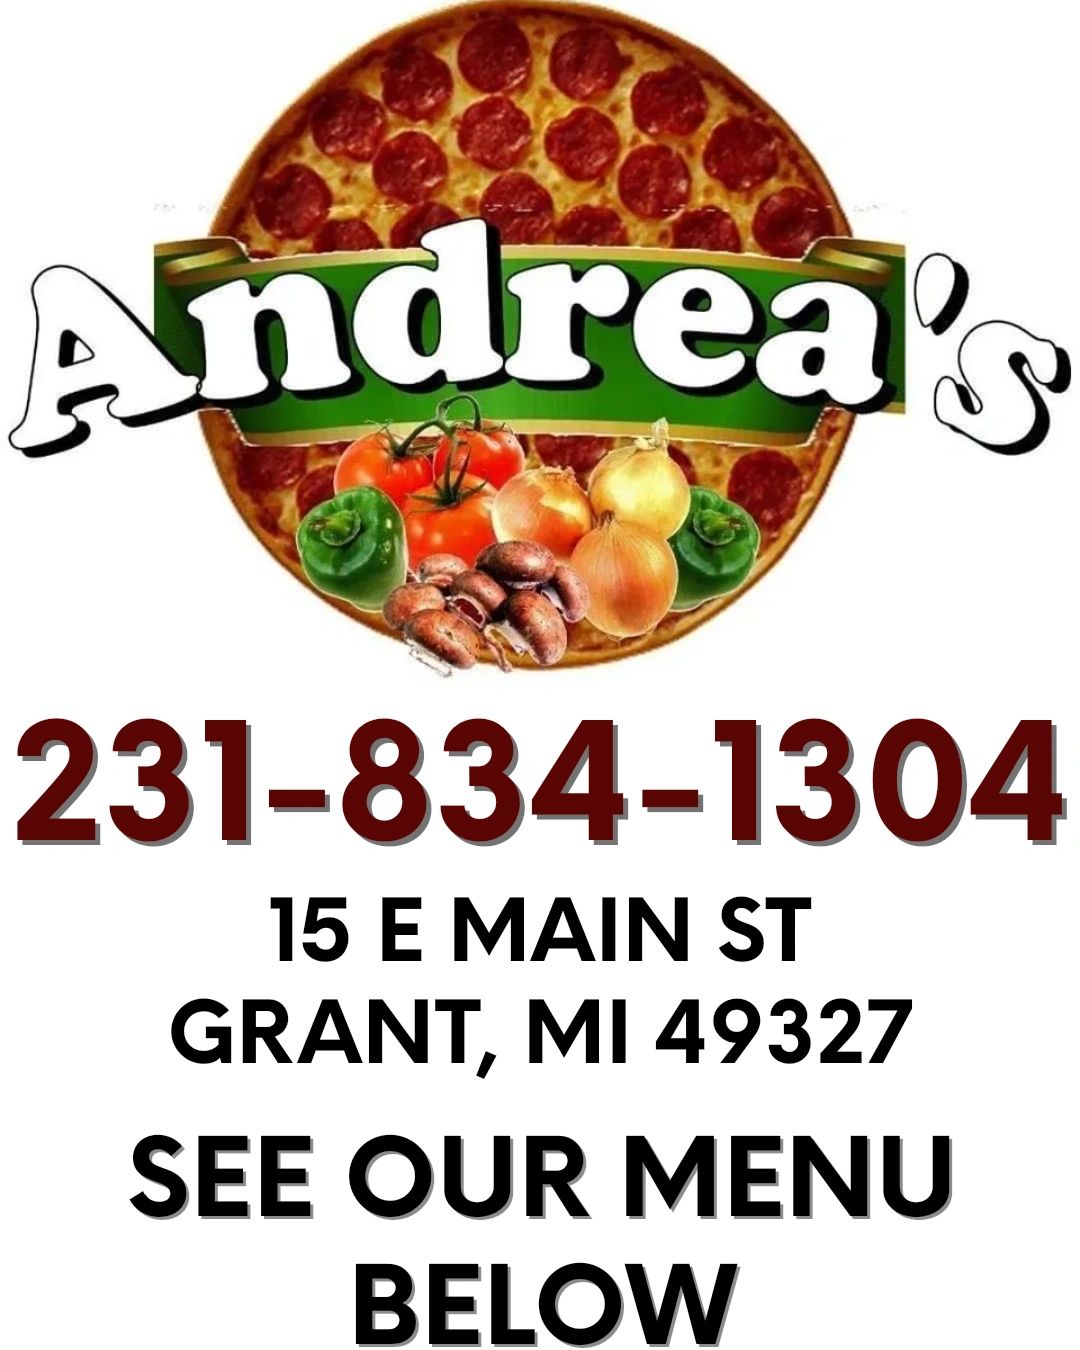 Andreas Pizza & Italian Restaurant 15 E Main St Grant, MI 49327 PIZZA, PASTA, SUBS, BURRITOS 